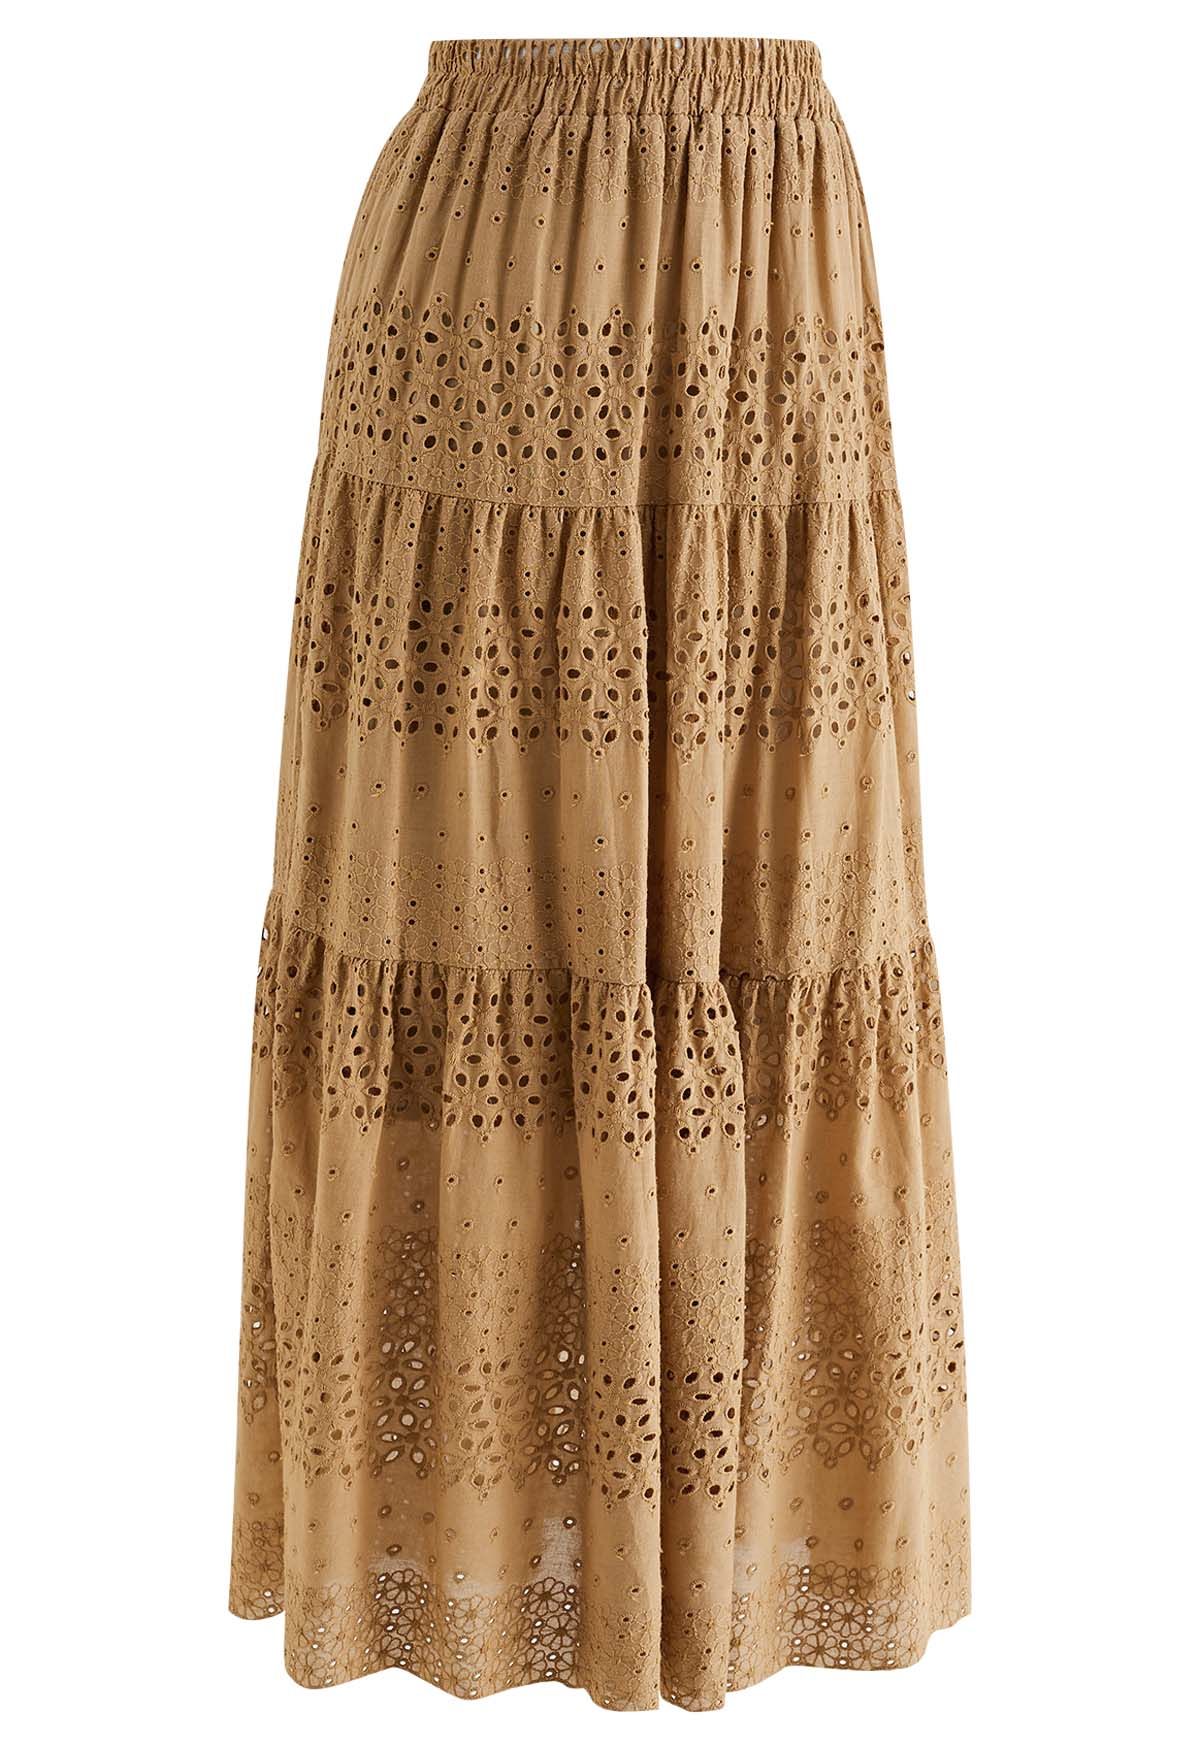 Floret Embroidered Eyelet Cotton Midi Skirt in Tan